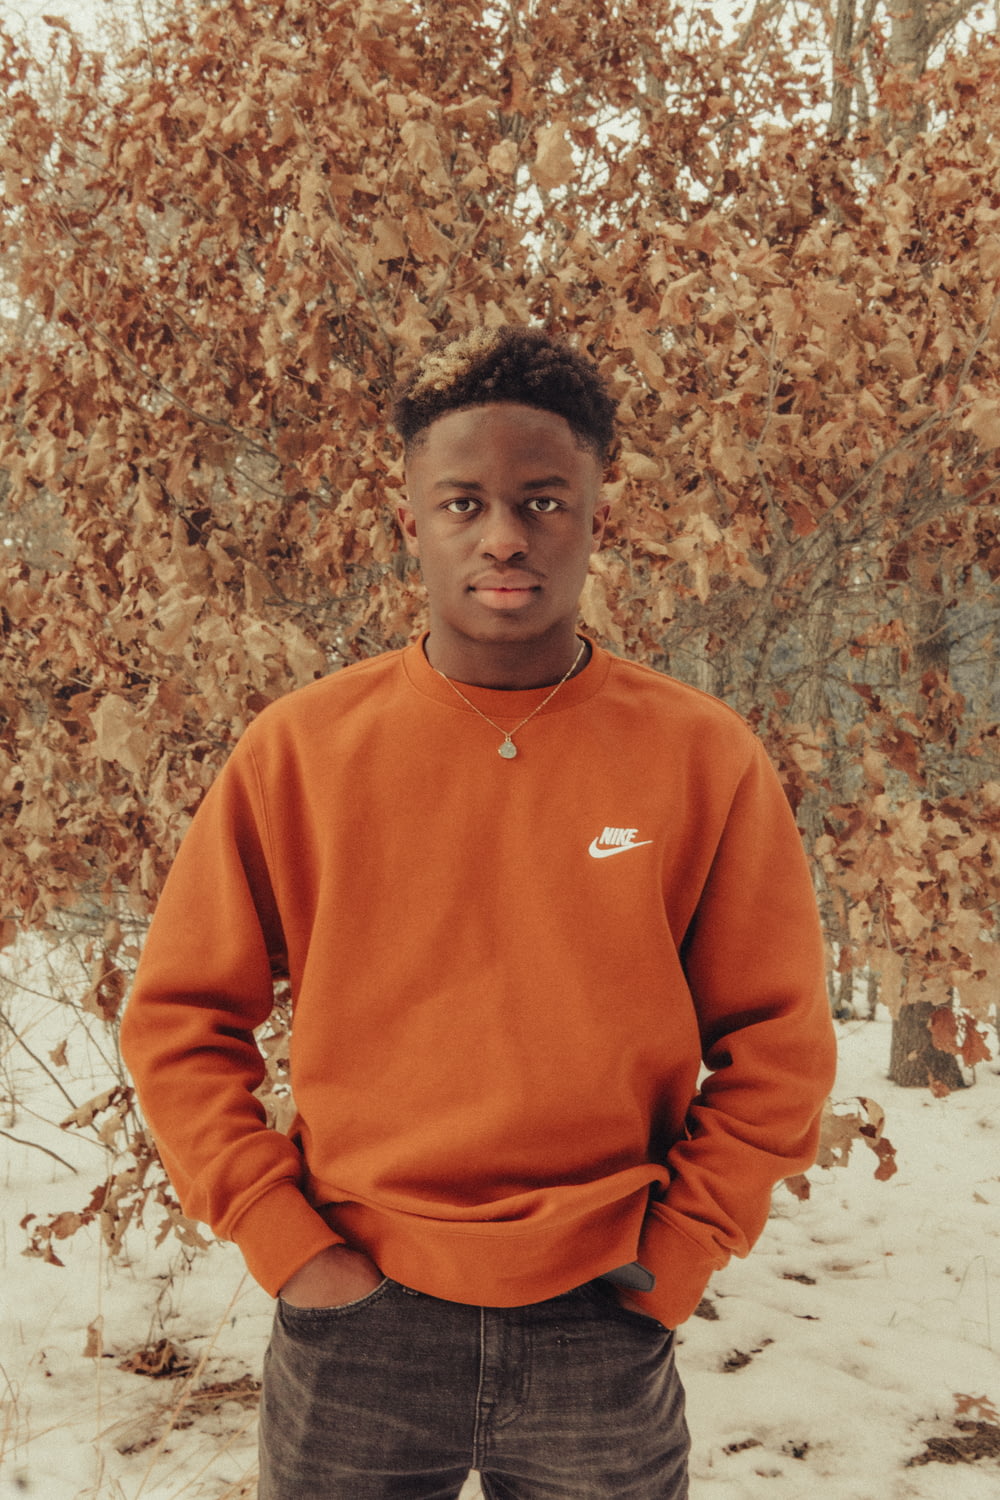 man in orange sweater standing near brown leaves